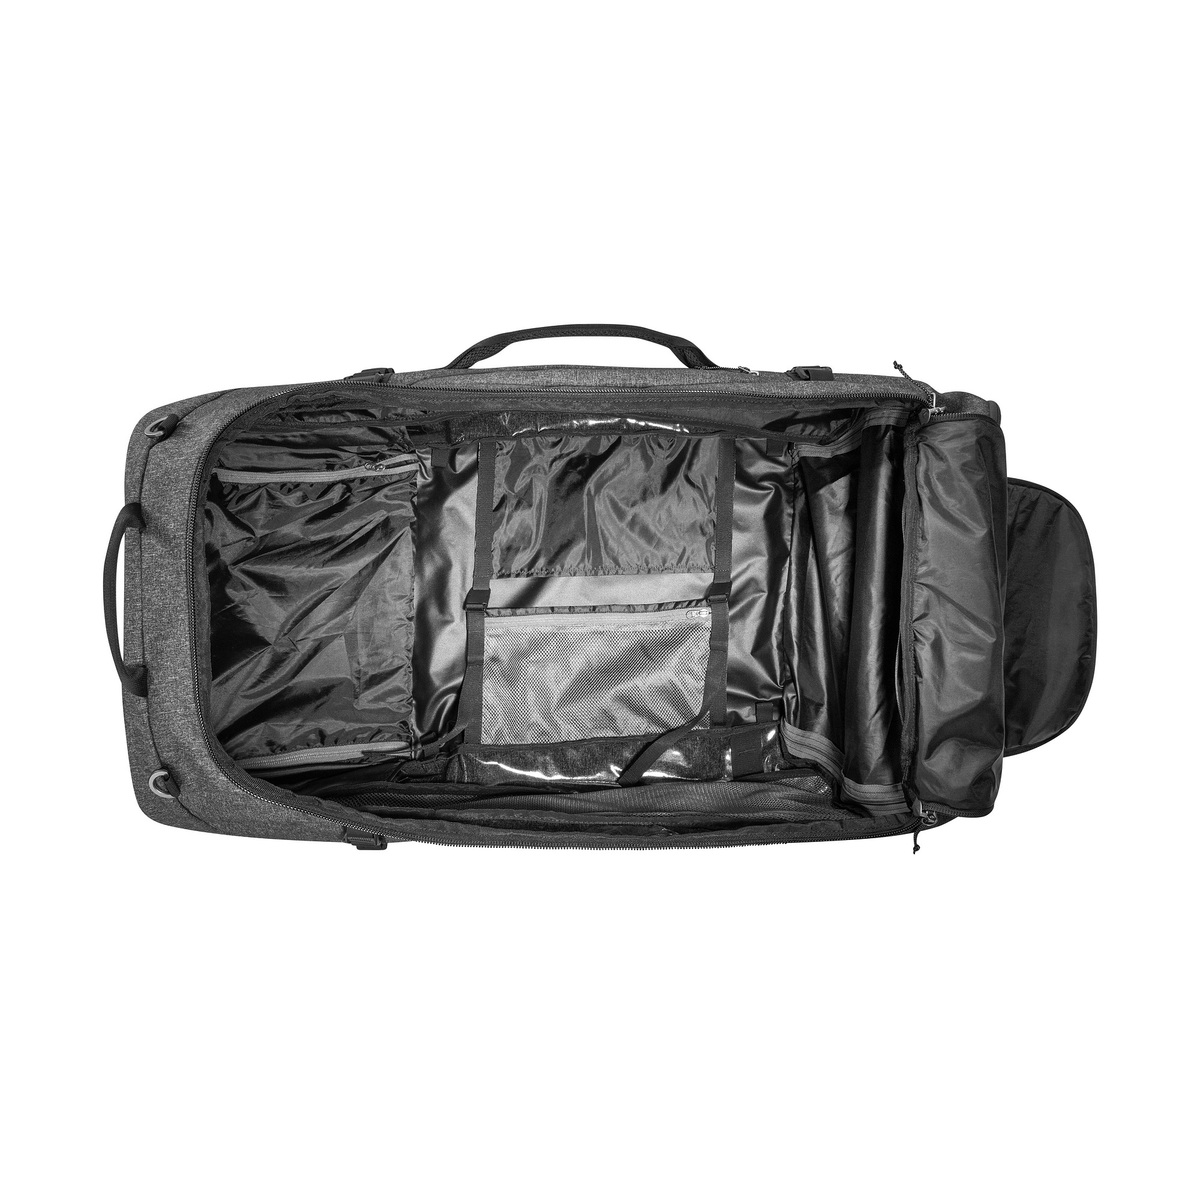 Trolleys & Luggage - Duffle Roller 140 - Tatonka | Backpacks, Tents ...